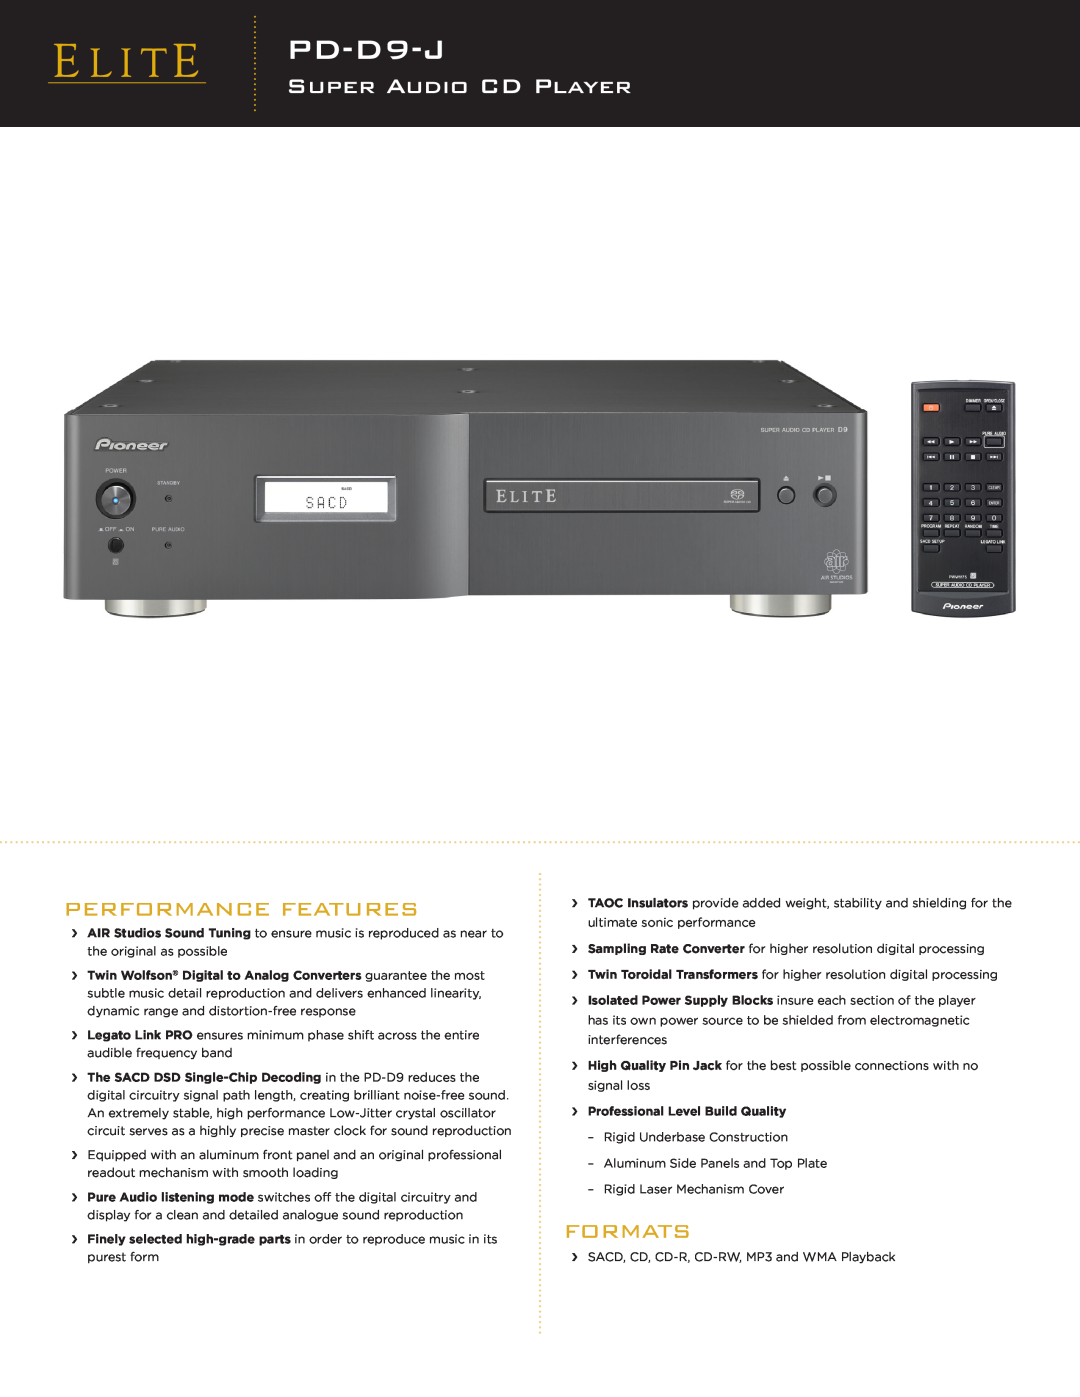 Elite PD-D9-J manual PDDV-58AVD9-J, Super Audio Cd Player, Performance Features, Formats 